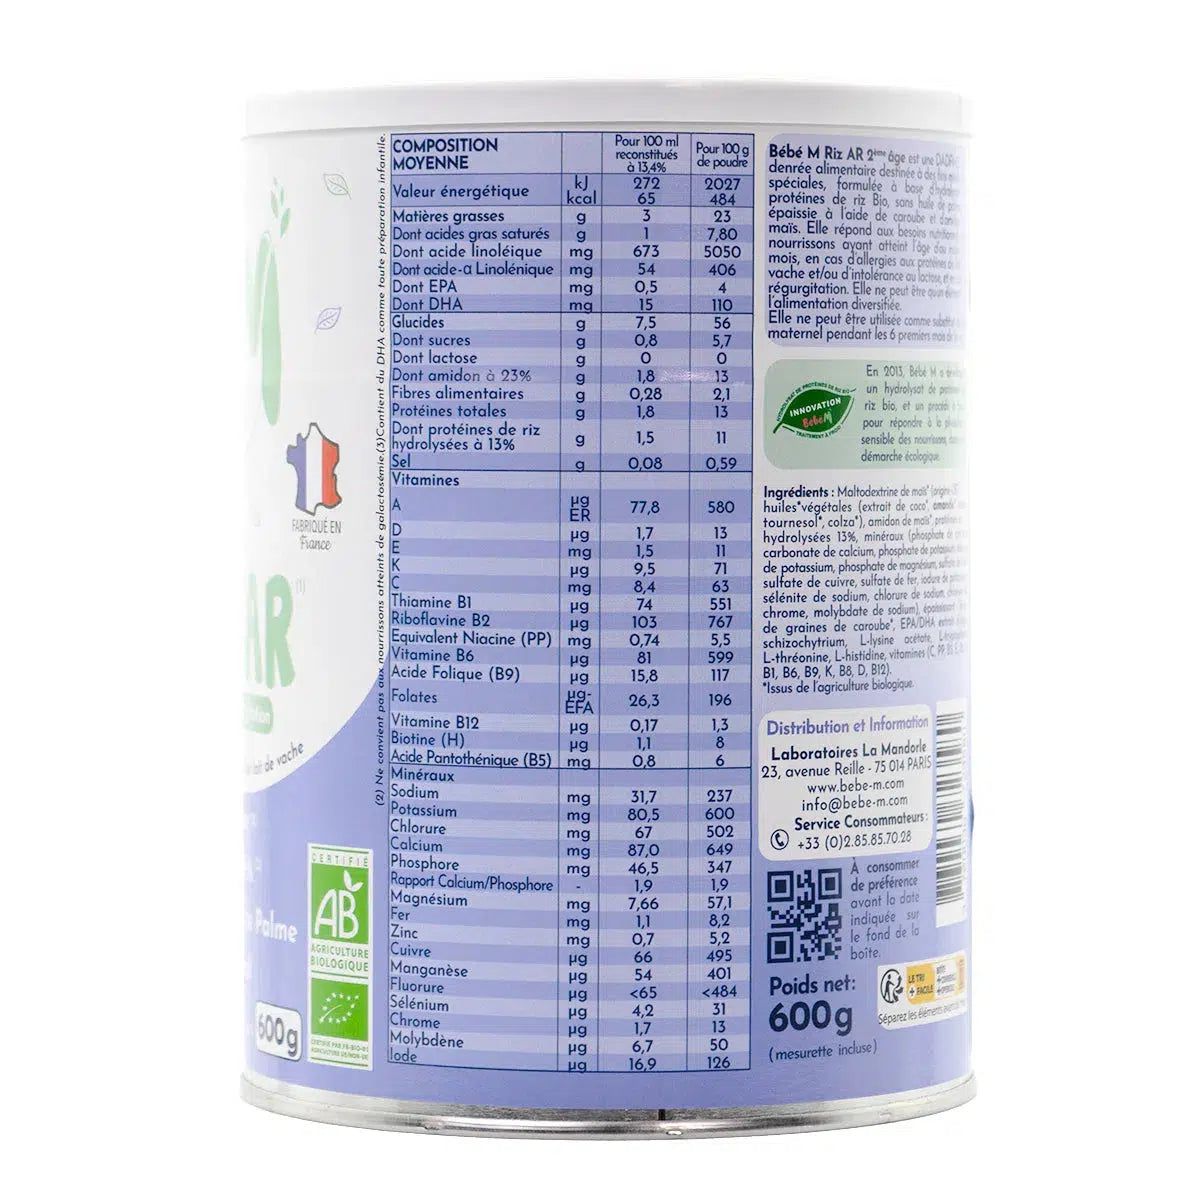 Bebe M (Bebe Mandorle) Organic Anti-Reflux Rice-Based Formula - Stage 2 (6+ months) | Organic Baby Formula | Nutrition facts